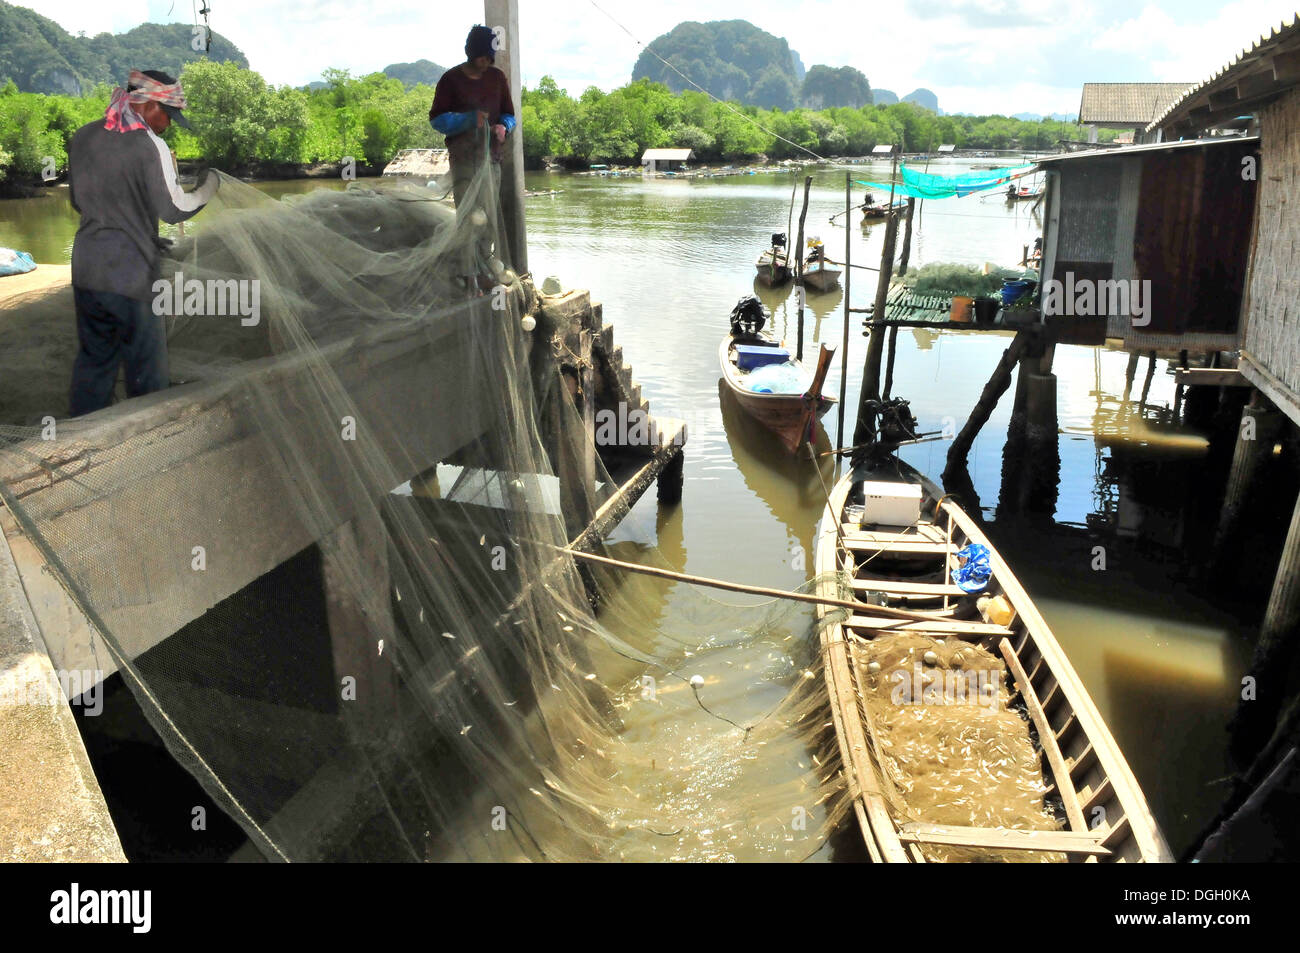 Fishing village in Krabi province, Thailand Stock Photo